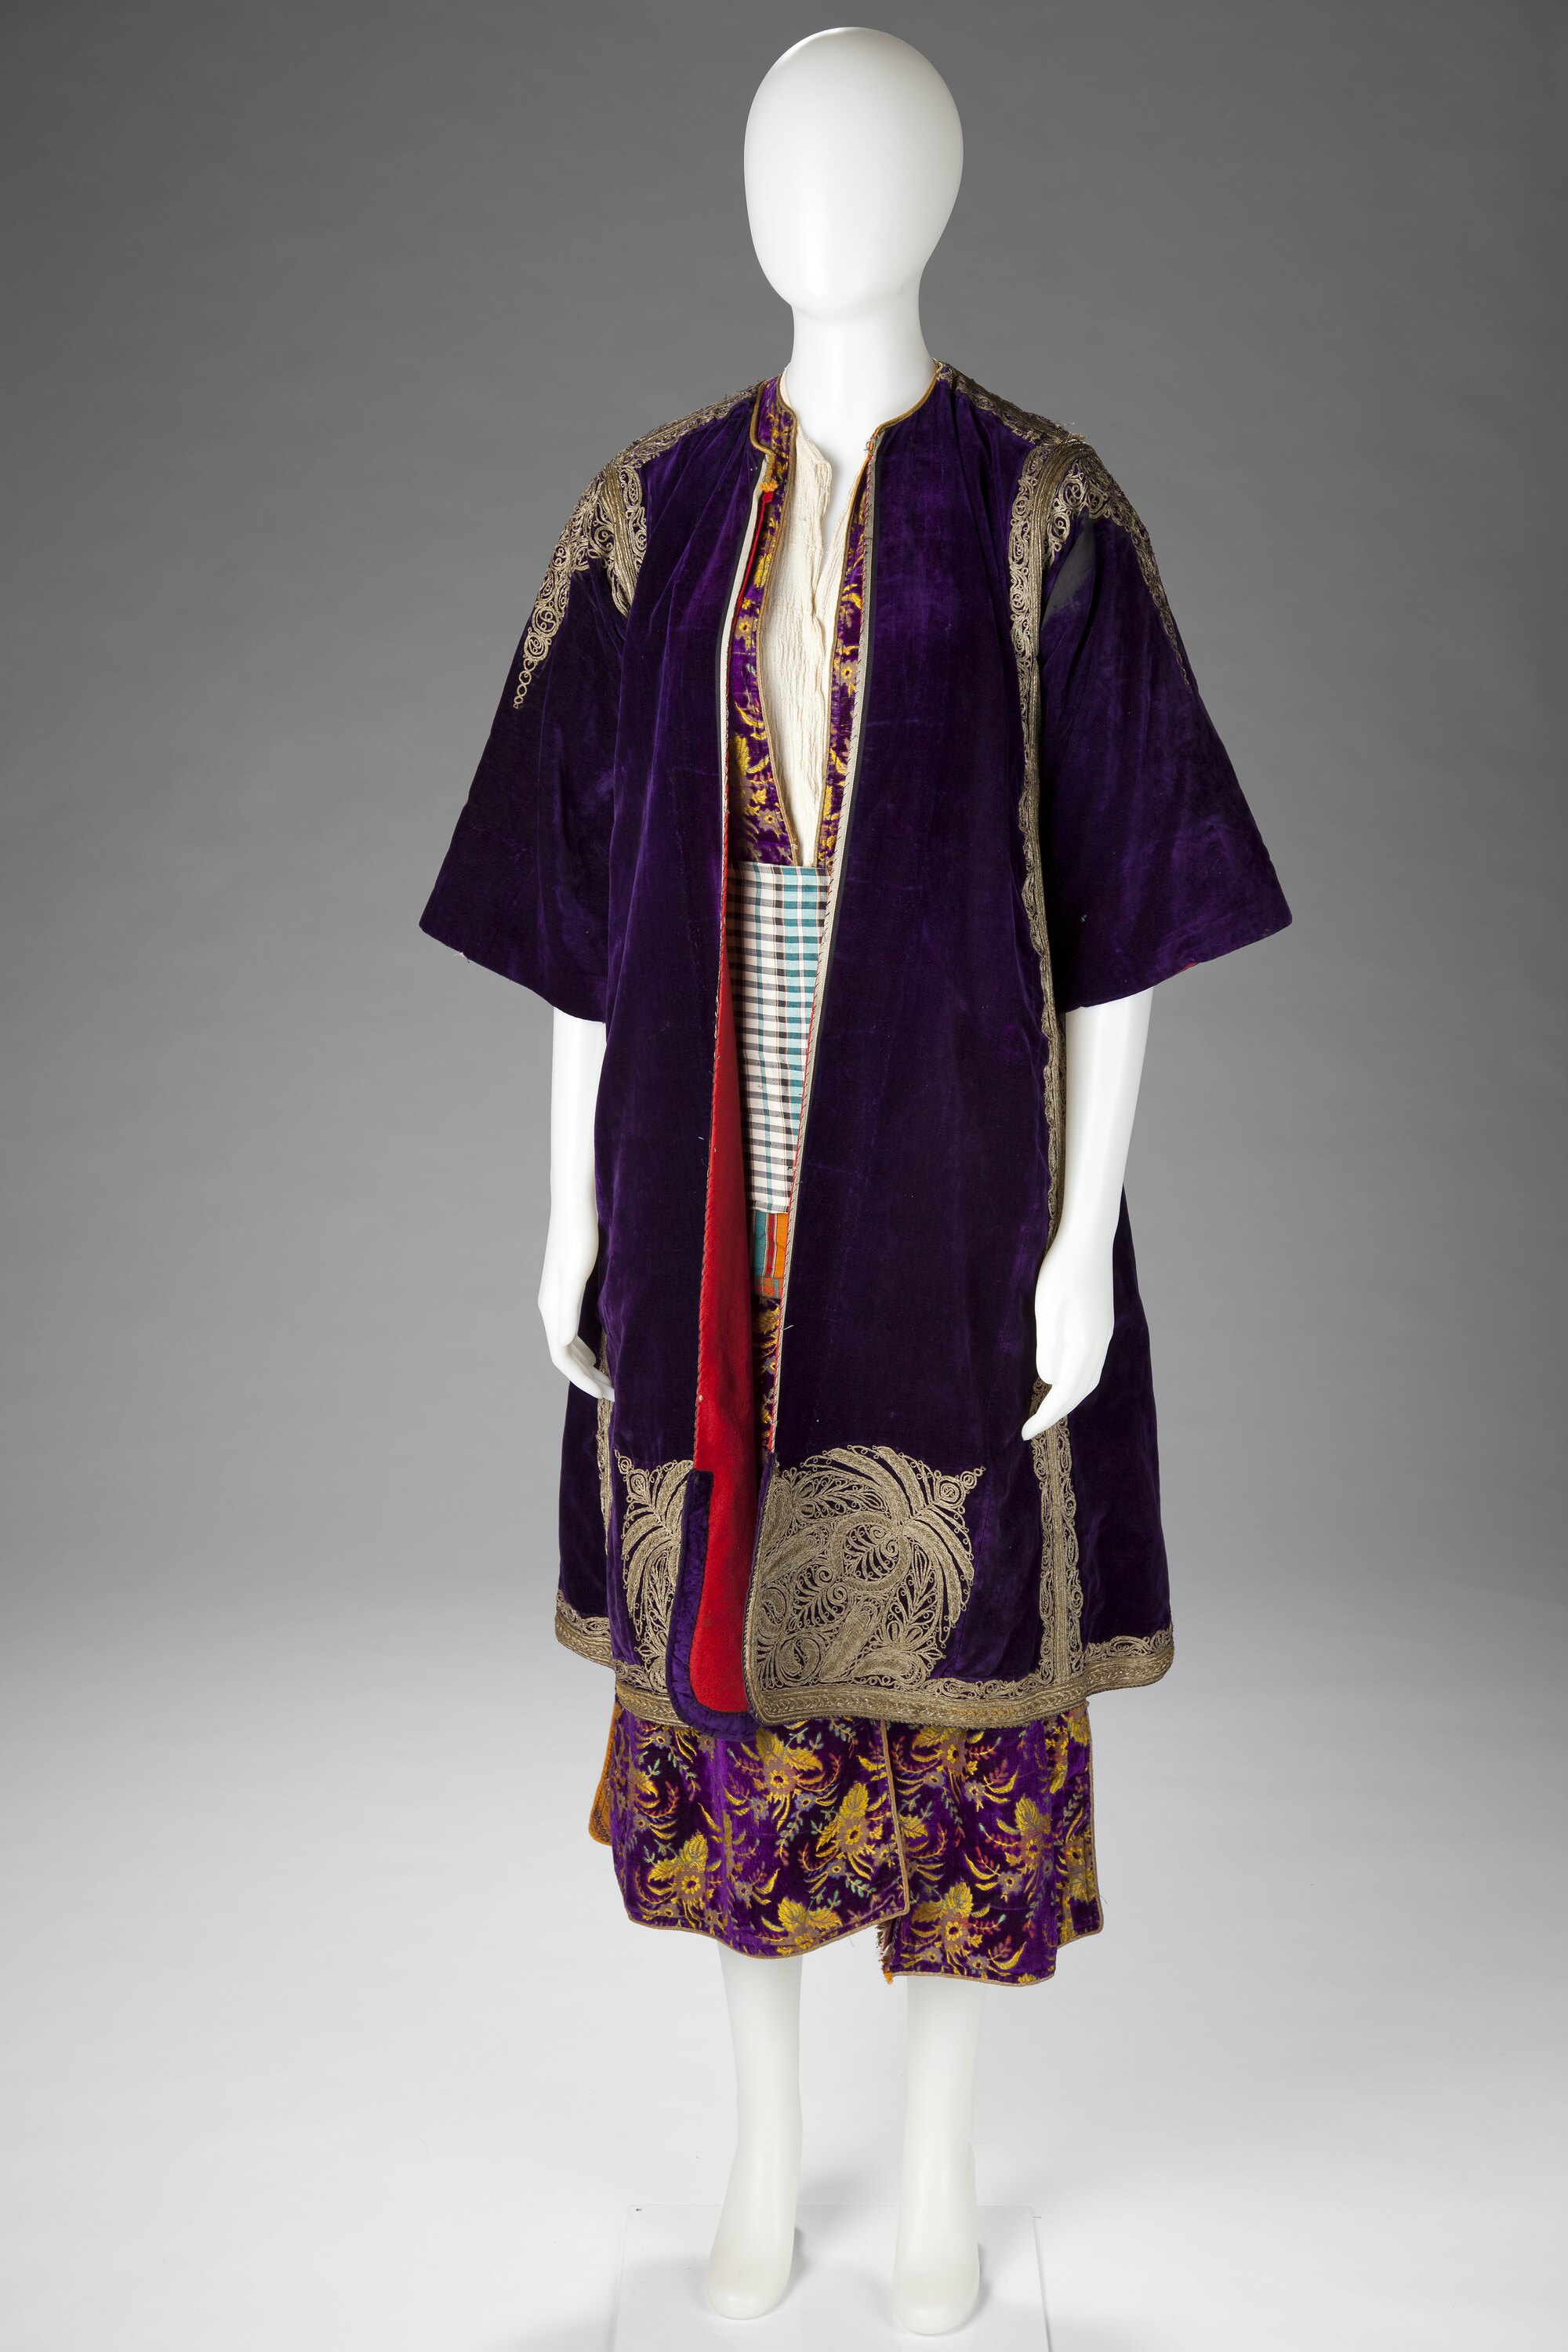 File:Turkish woman in Ottoman costume 13.jpg - Wikimedia Commons